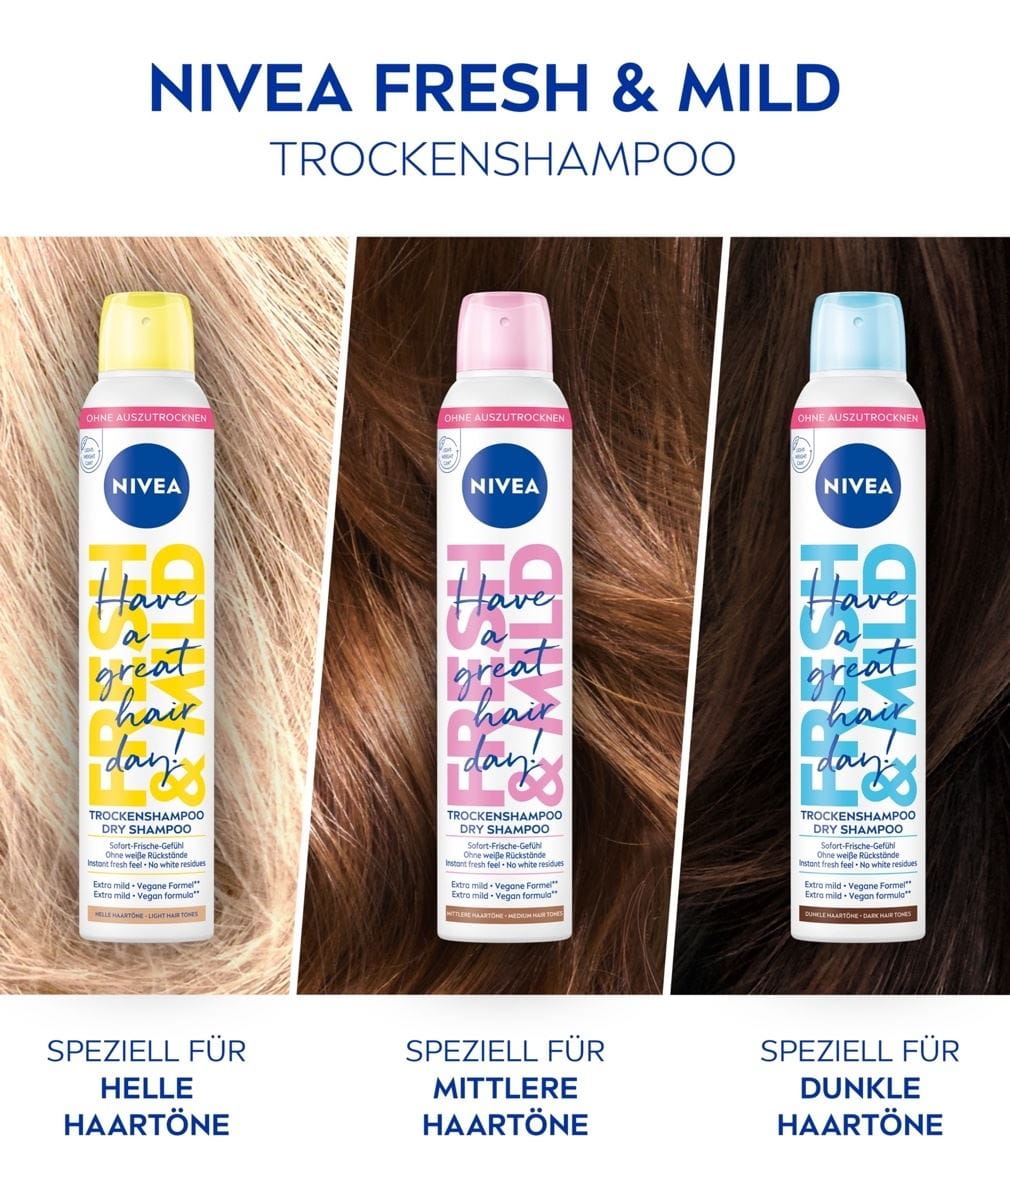 NIVEA Fresh & Mild Trockenshampoo dunkel Produktübersicht Haartöne